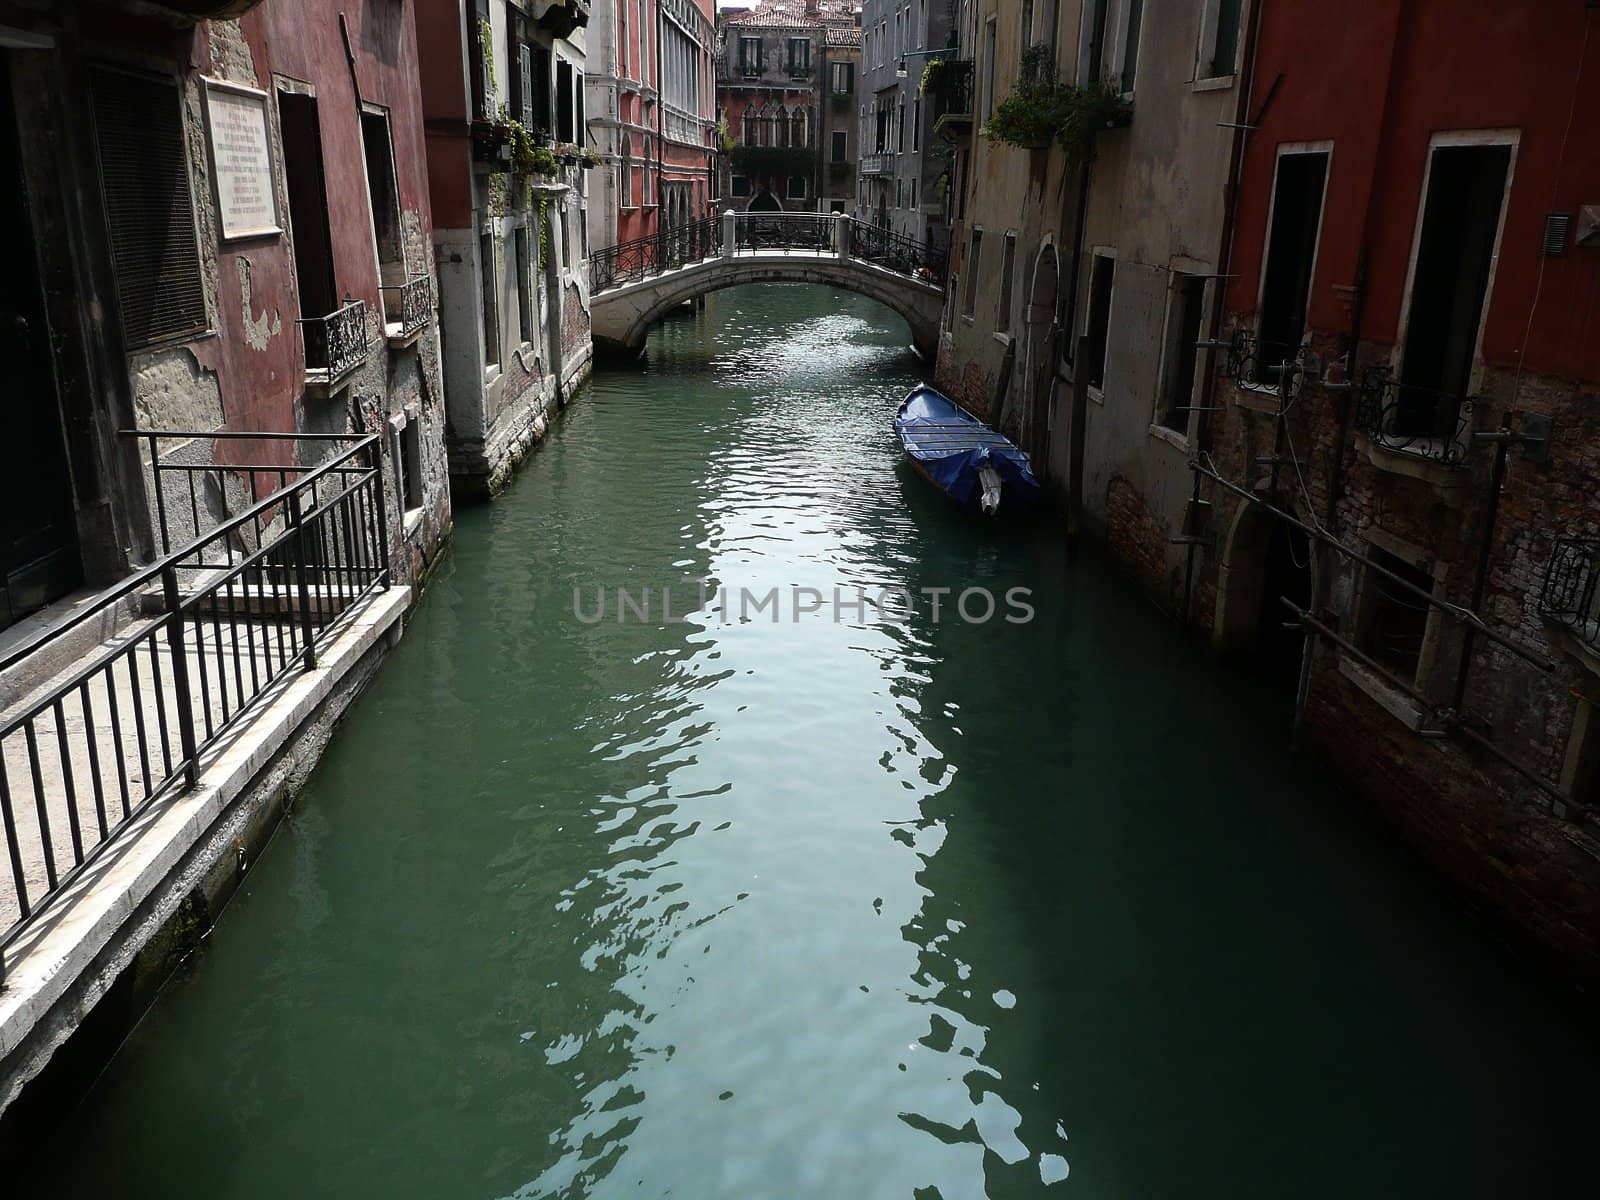 Deserted Canal, Venice, Italy by marcorubino